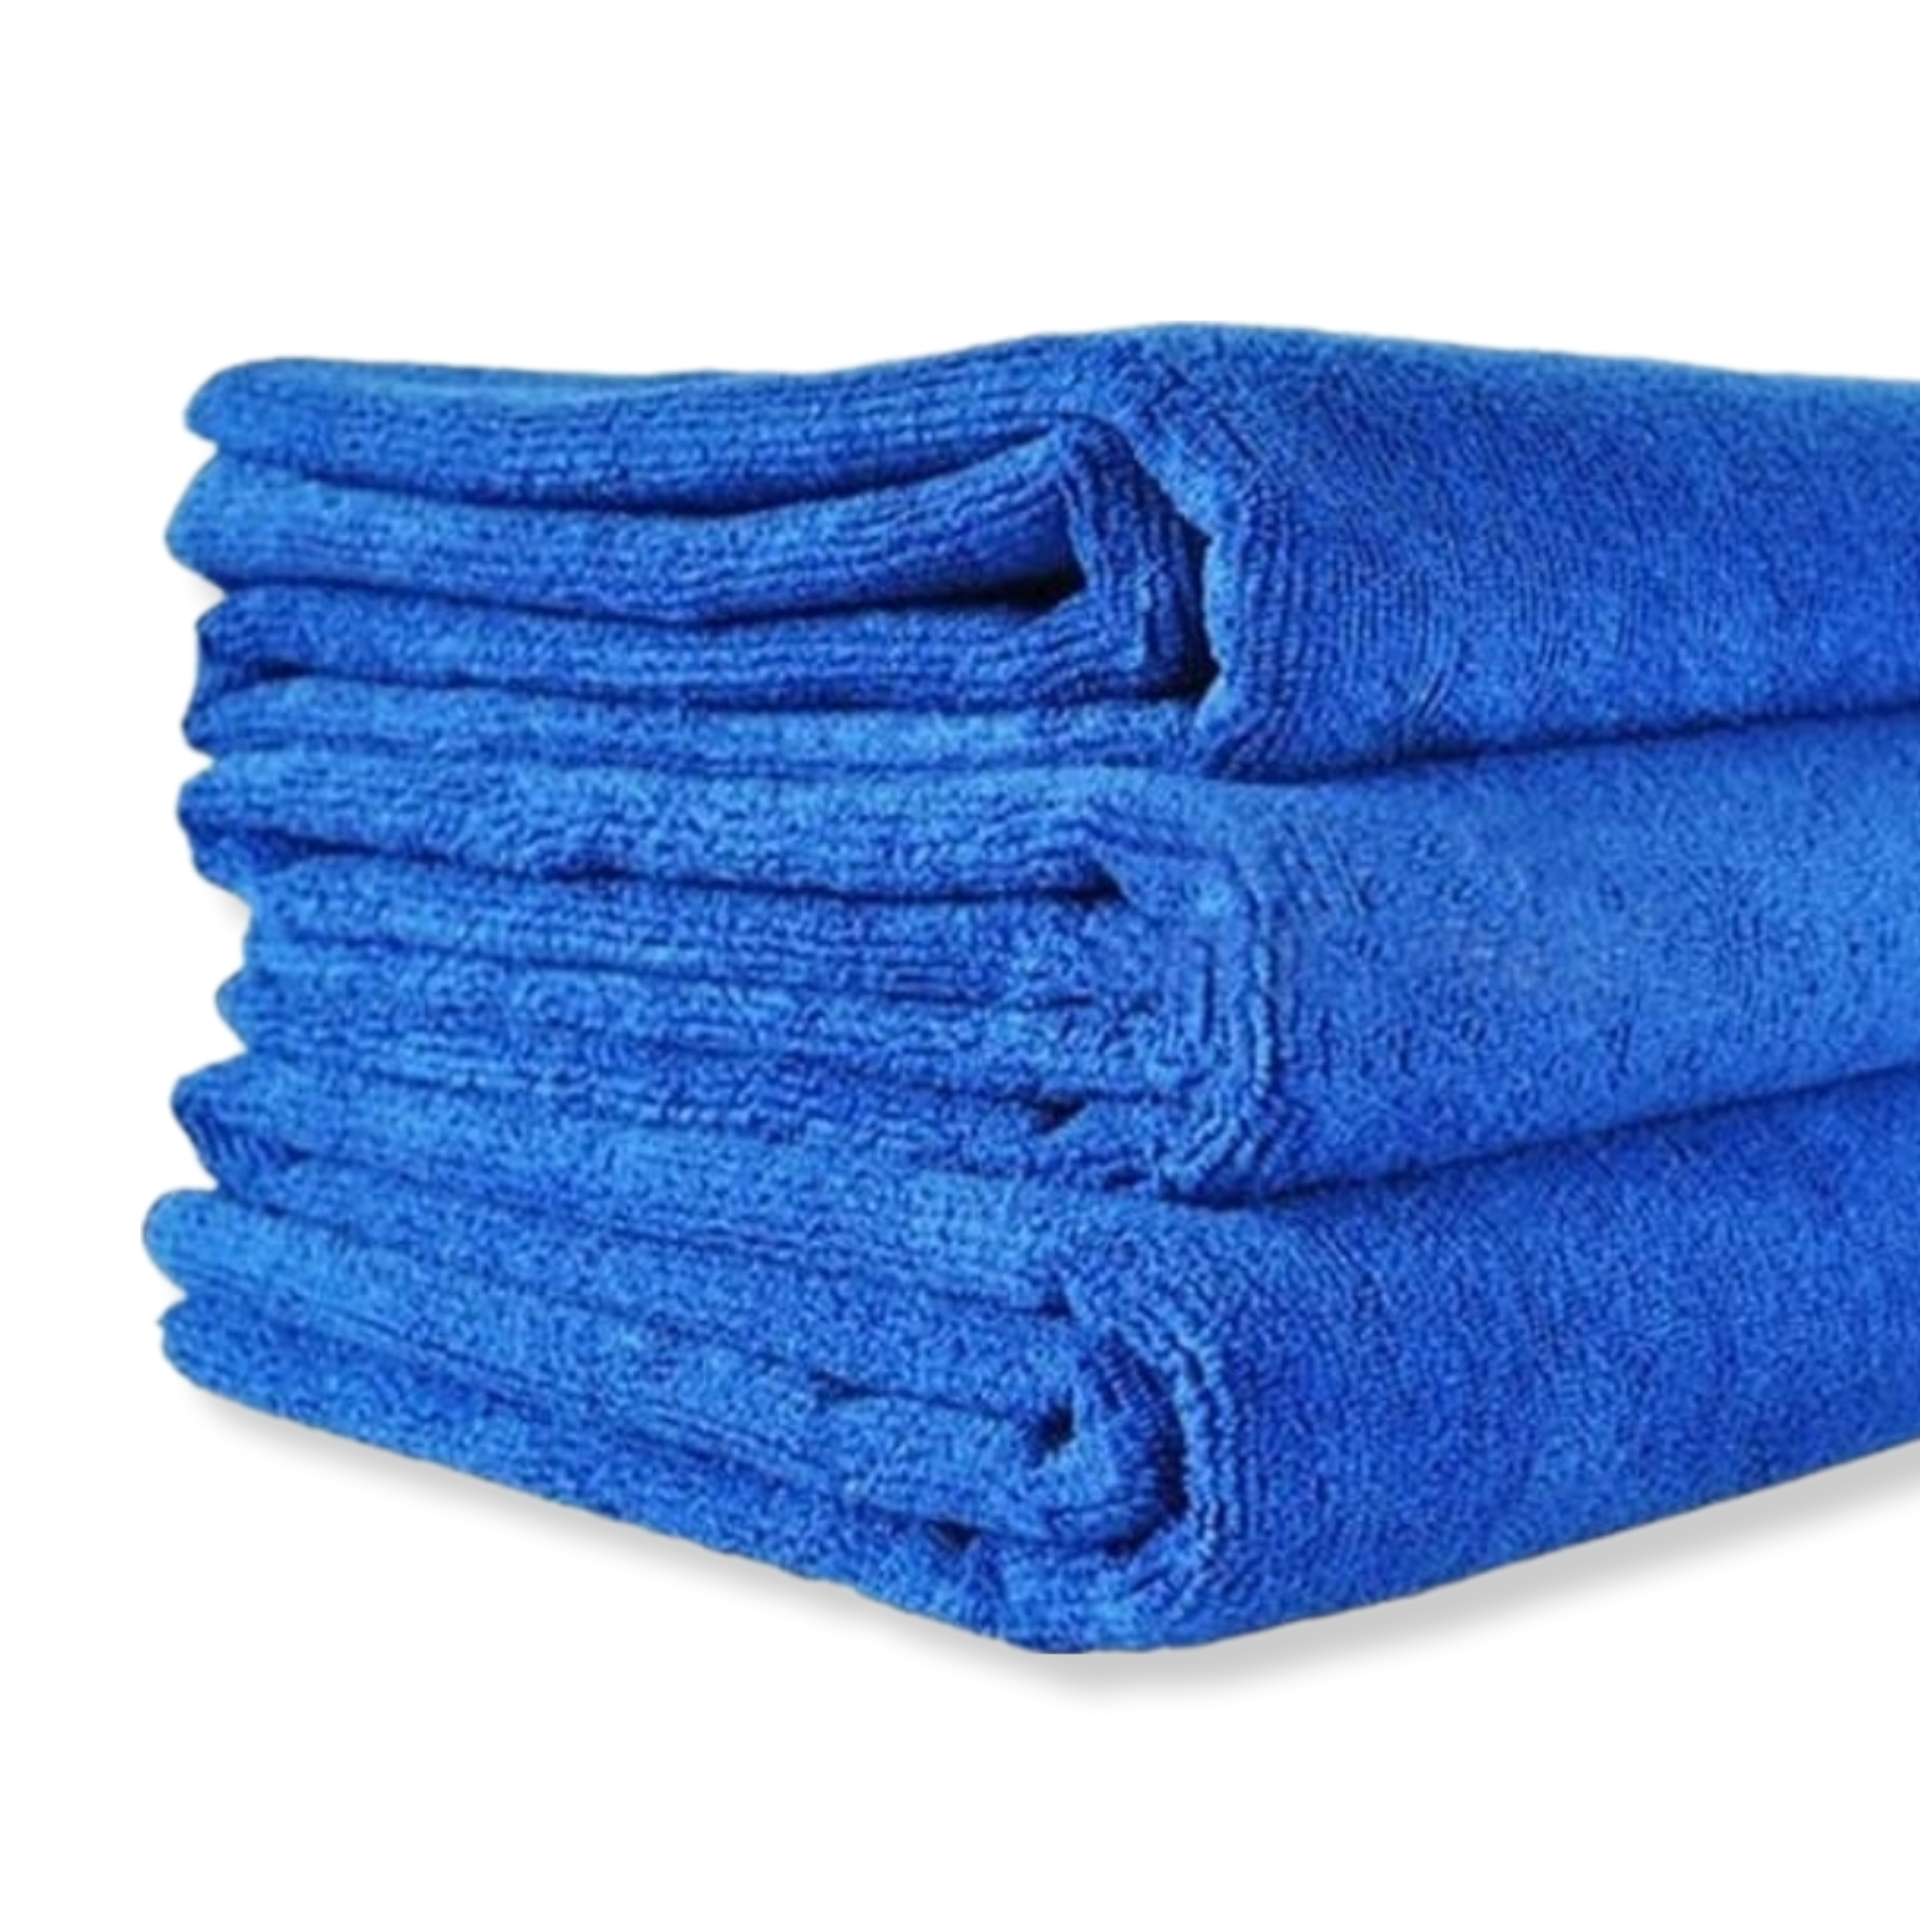 Купить полотенце размер. Полотенце махровое синее 110 50 см. Полотенце махровое 50х110см, цв. Синий. Полотенце махровое банное 100х150. Полотенце армейское.